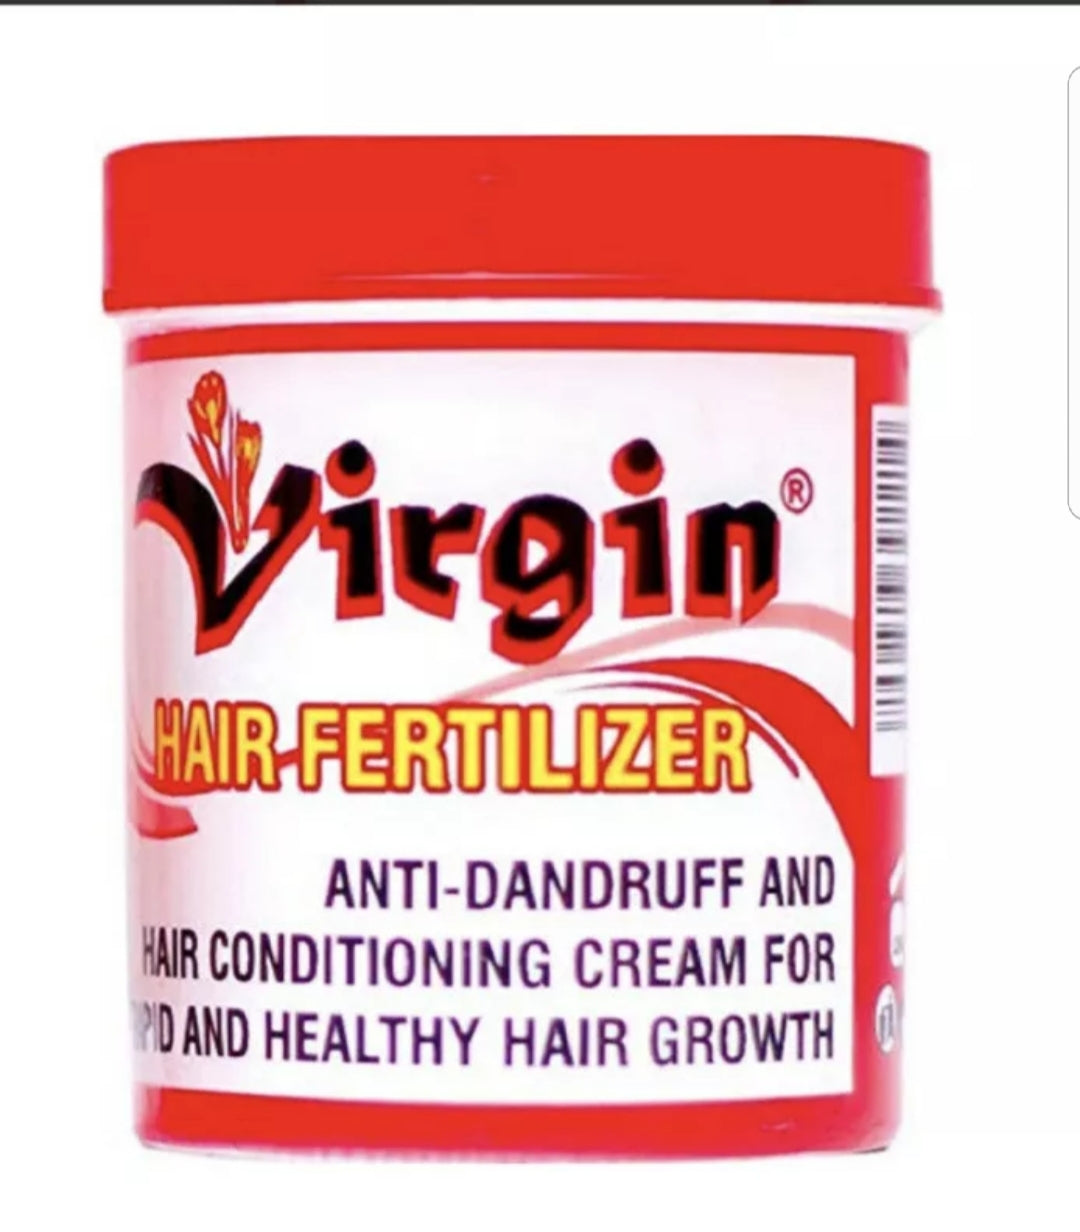 Virgin Hair Fertilizer Anti Dandruff and Conditioning Cream 200g